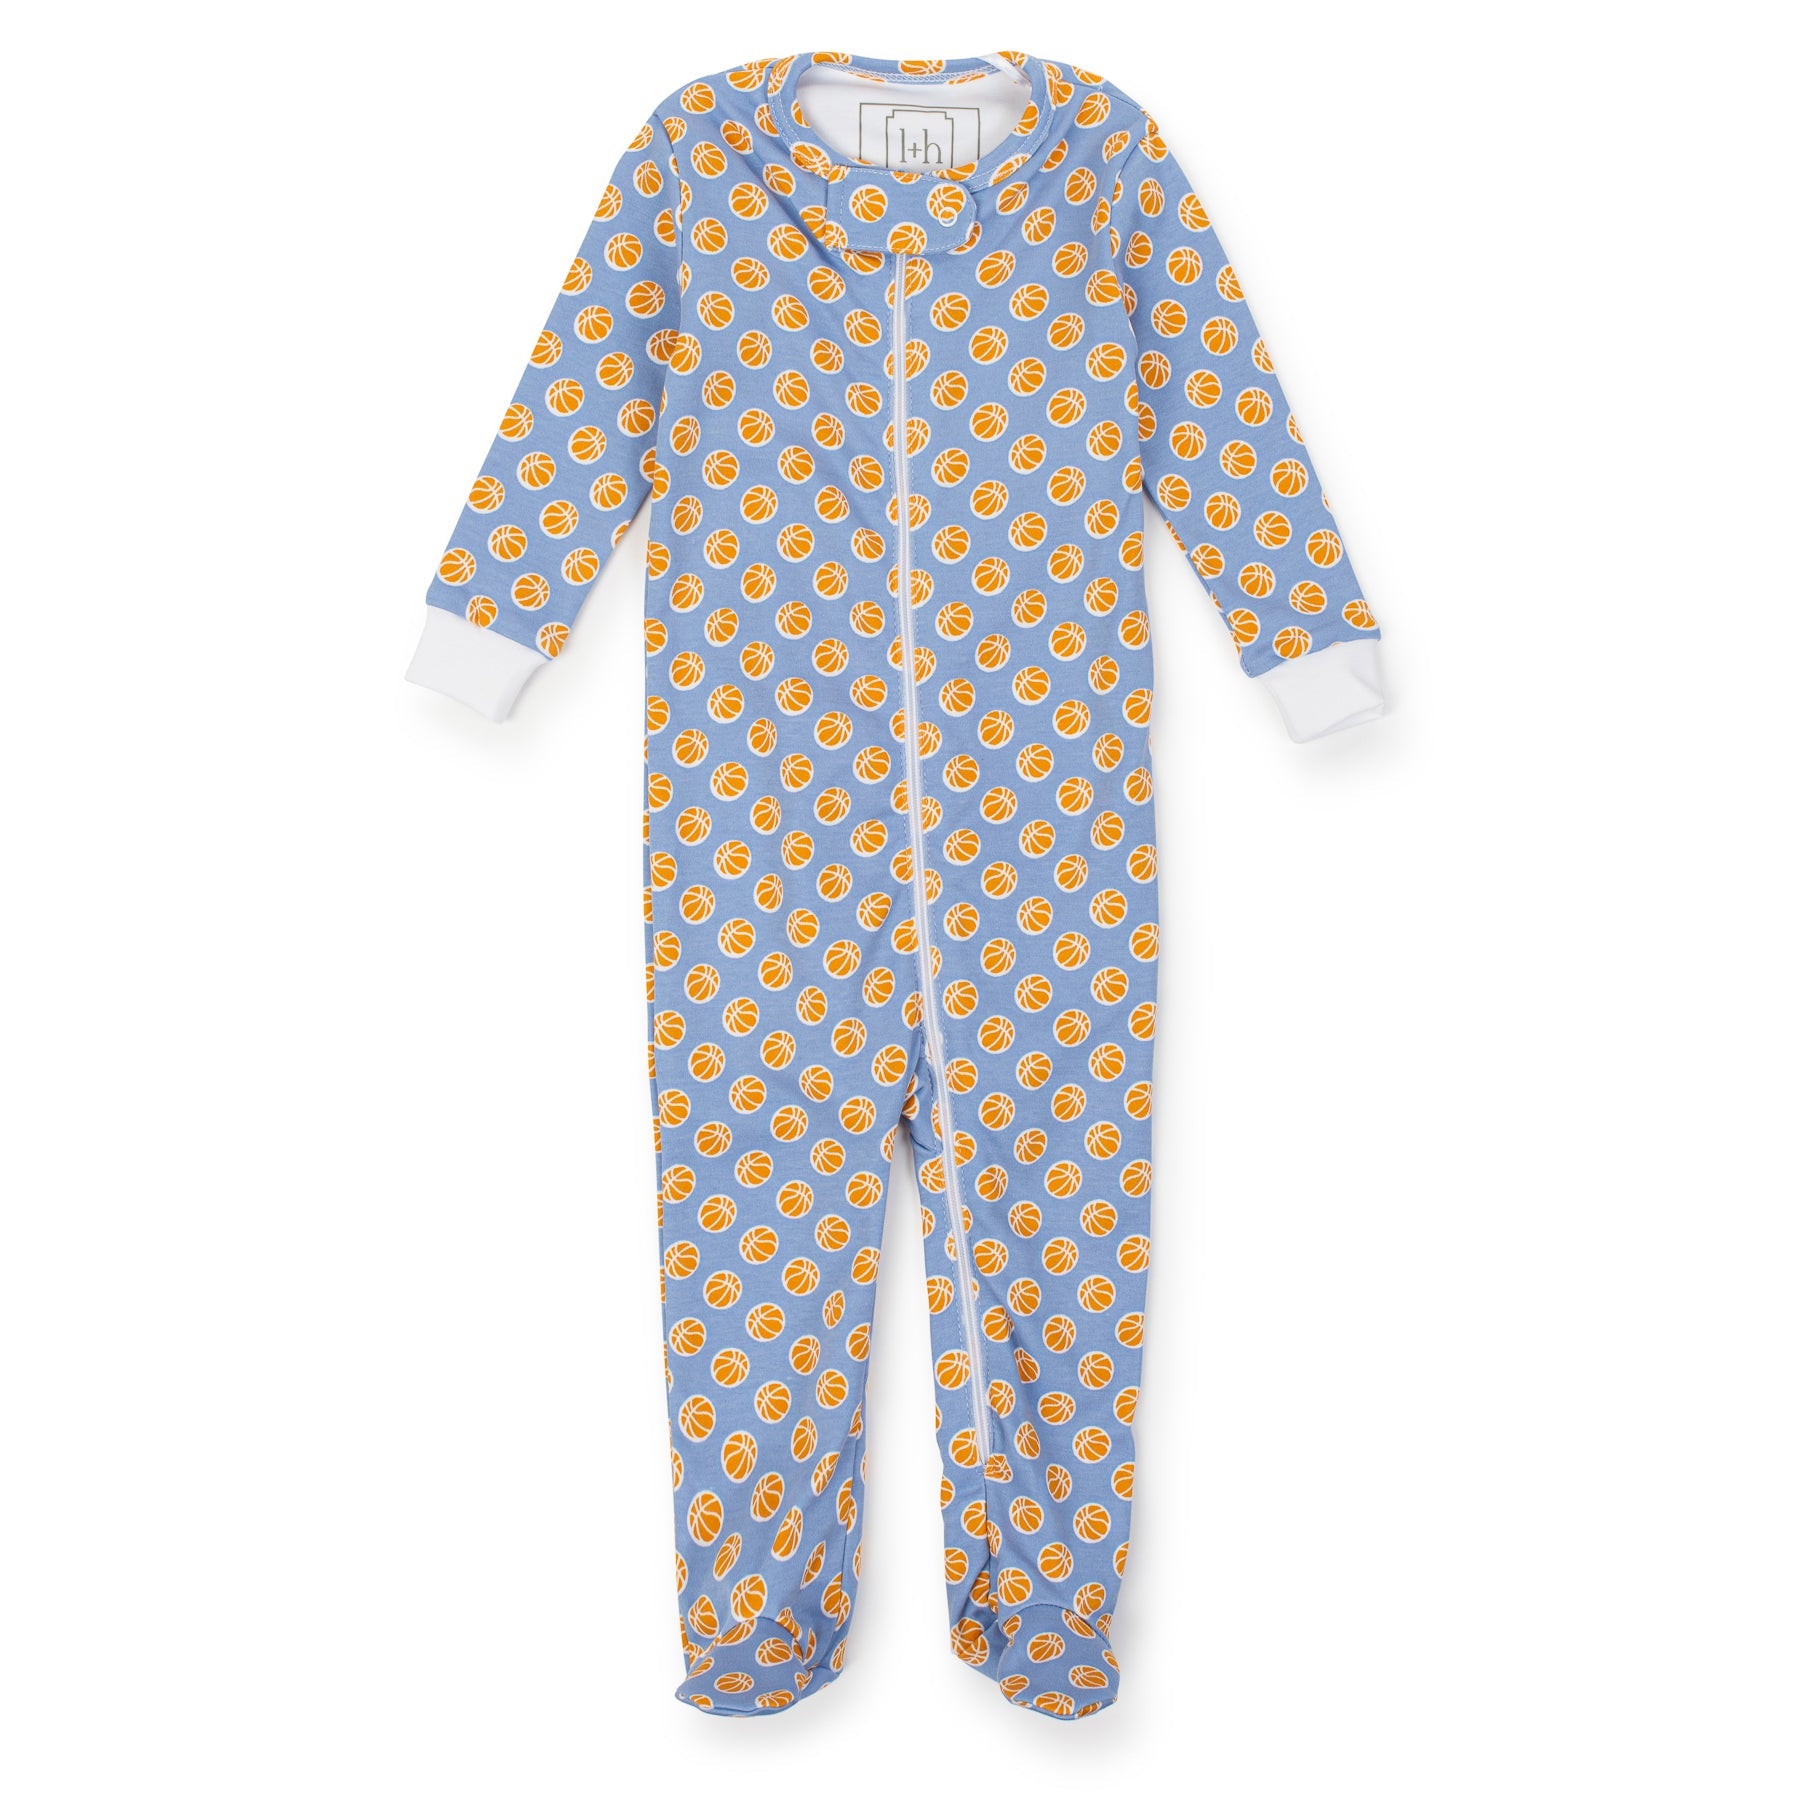 Parker Boys' Pima Cotton Zipper Pajama - Hoop it up Blue - HoneyBug 